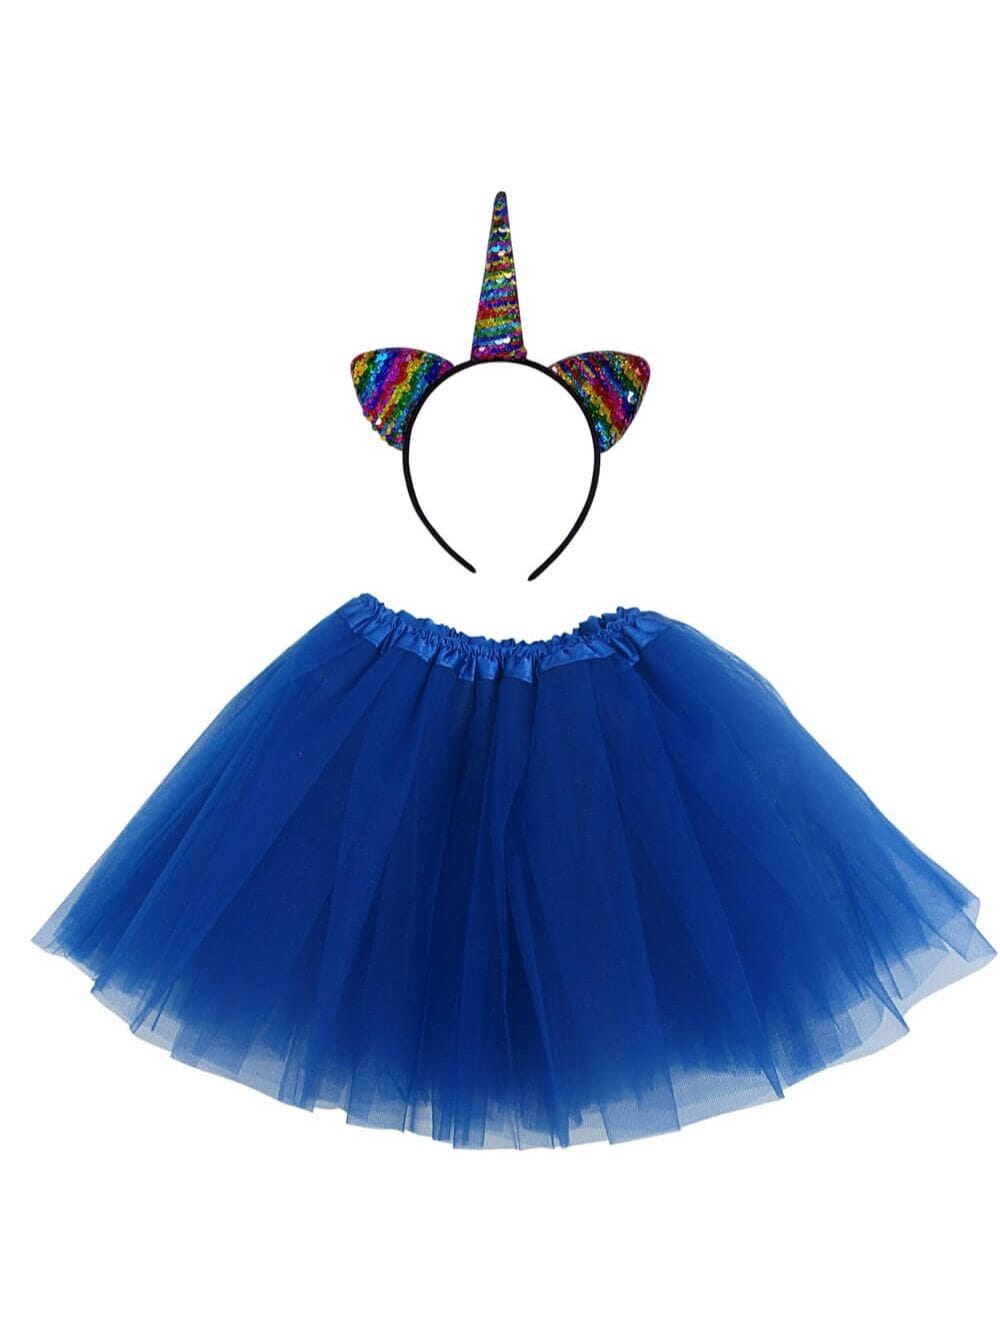 Adult Rainbow Royal Blue Unicorn Costume - Tutu Skirt & Flip Sequin Headband Horn Set for Adult or Plus Size - Sydney So Sweet